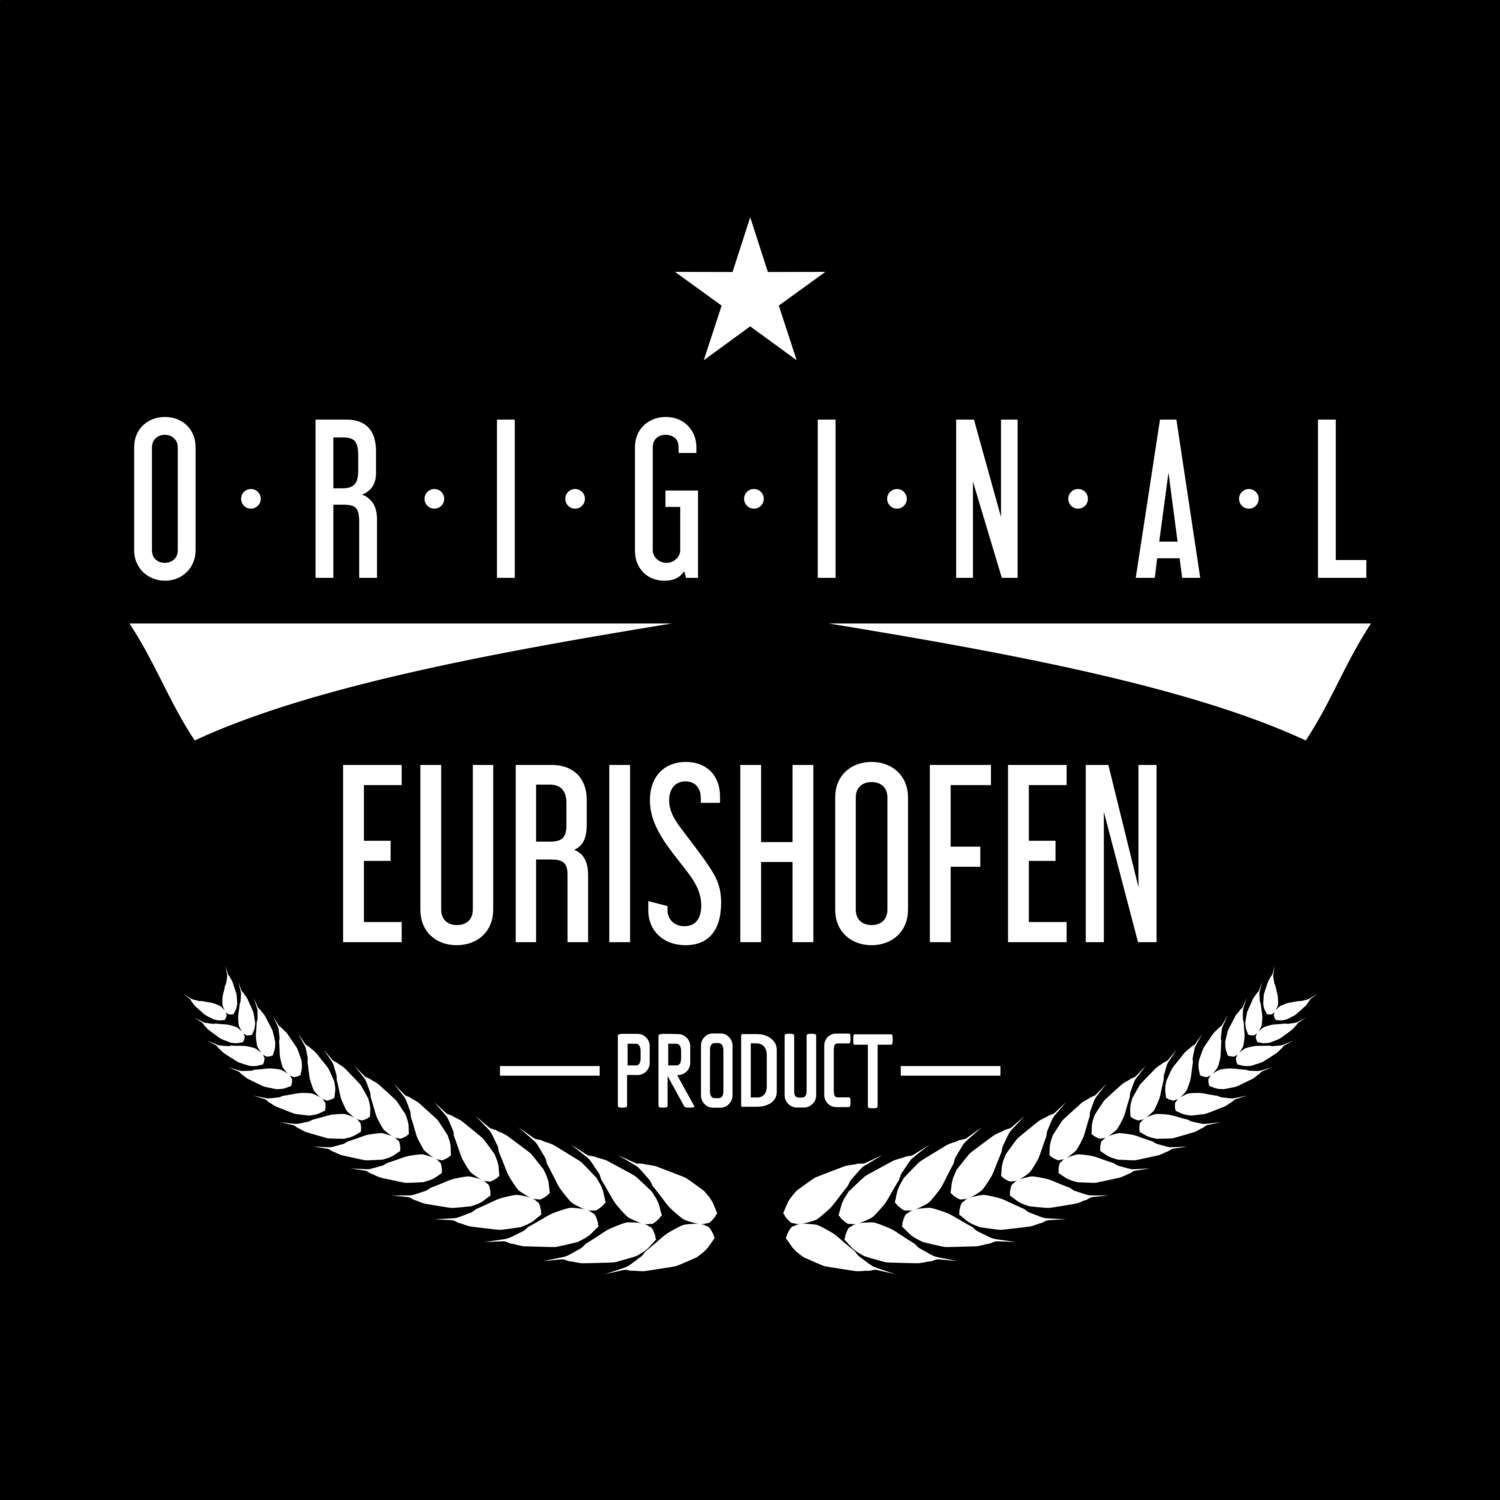 Eurishofen T-Shirt »Original Product«